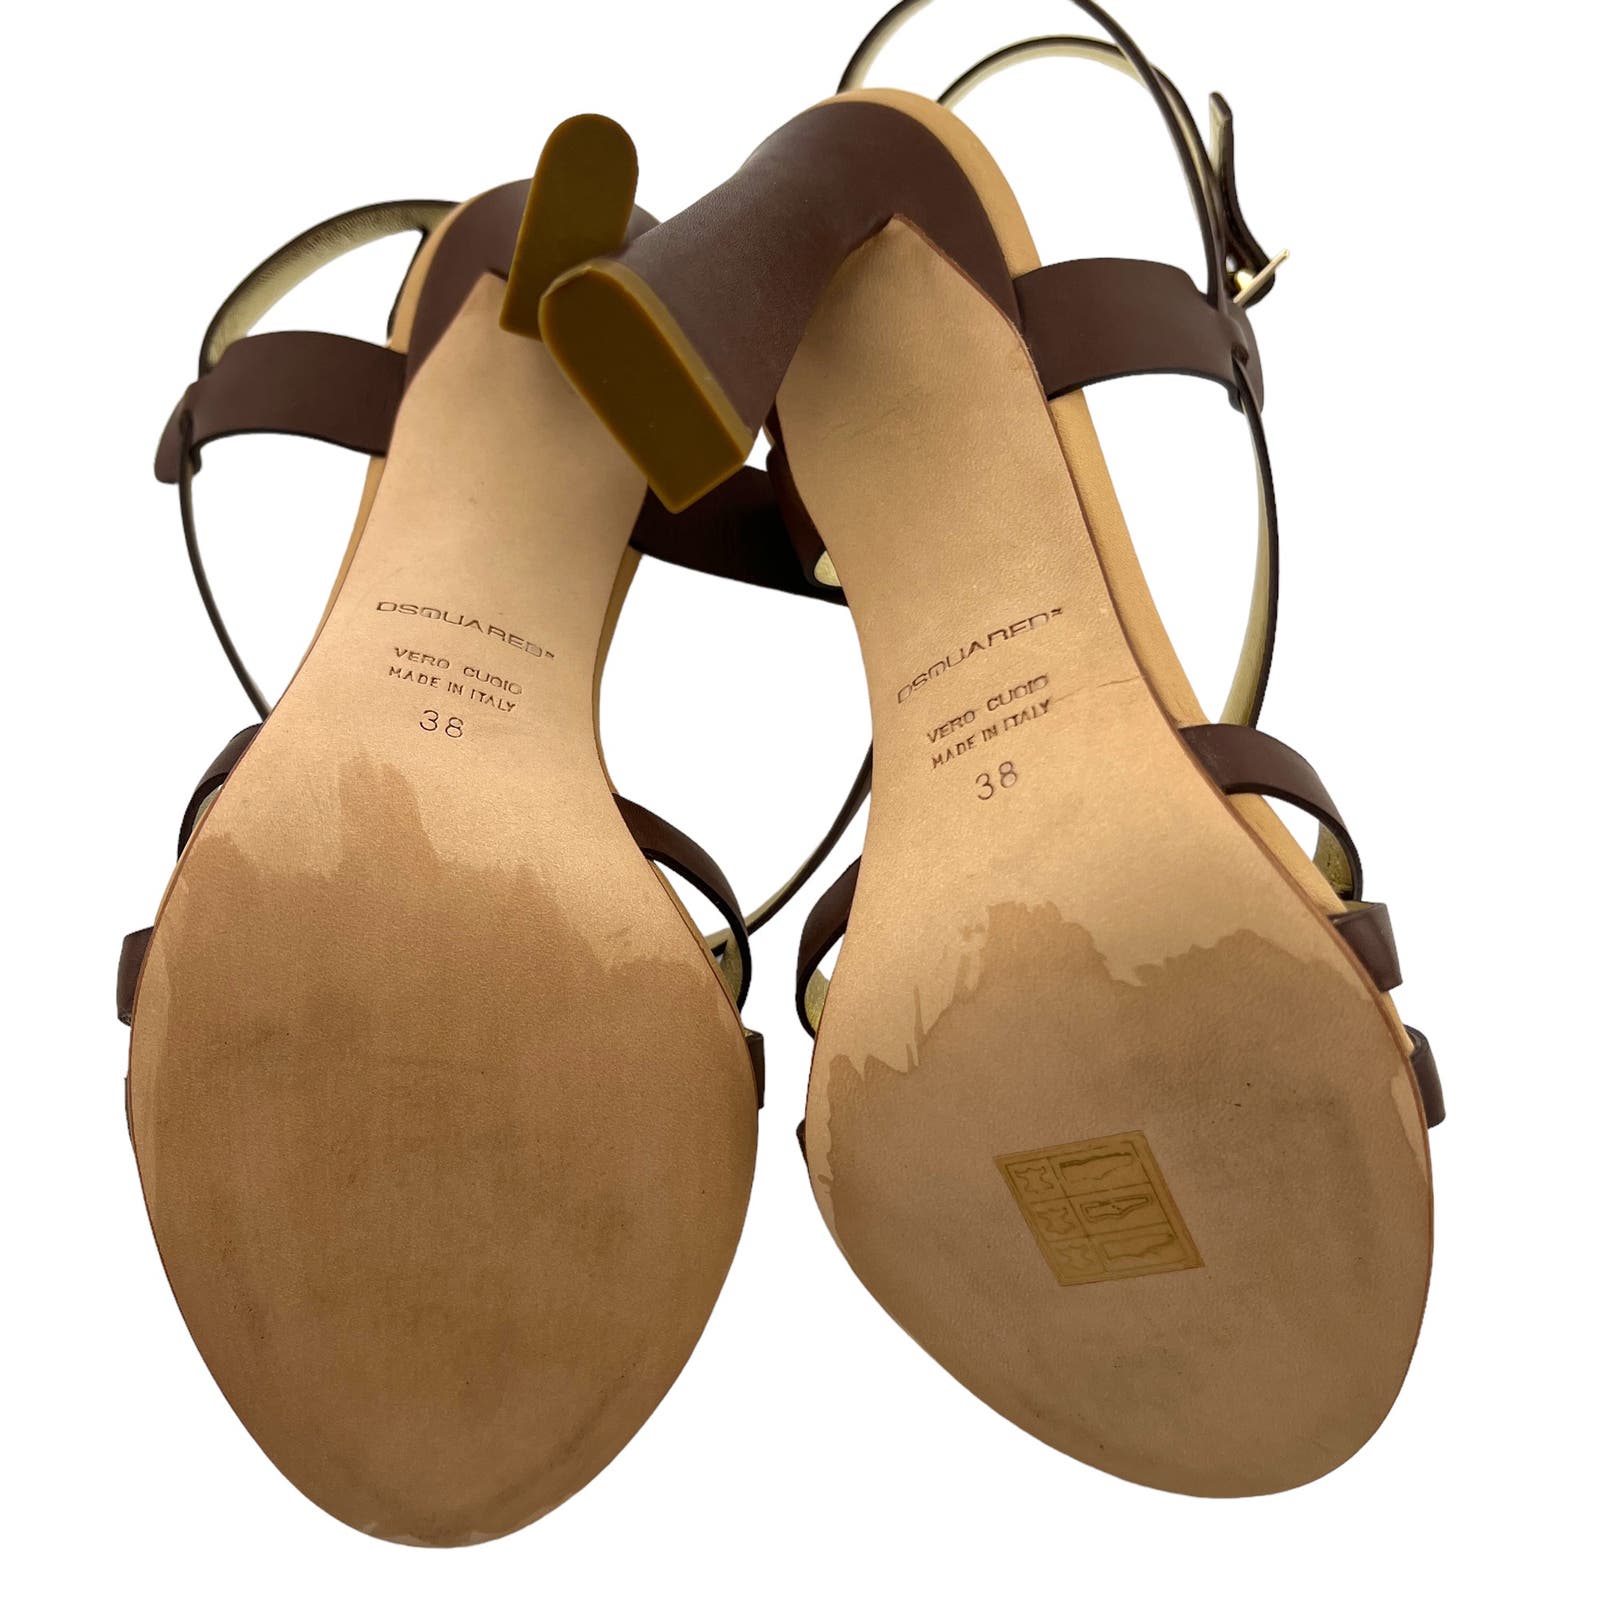 DSQUARED2 Women US 8 Brown Leather Ankle Strap Stiletto Pump Sandals